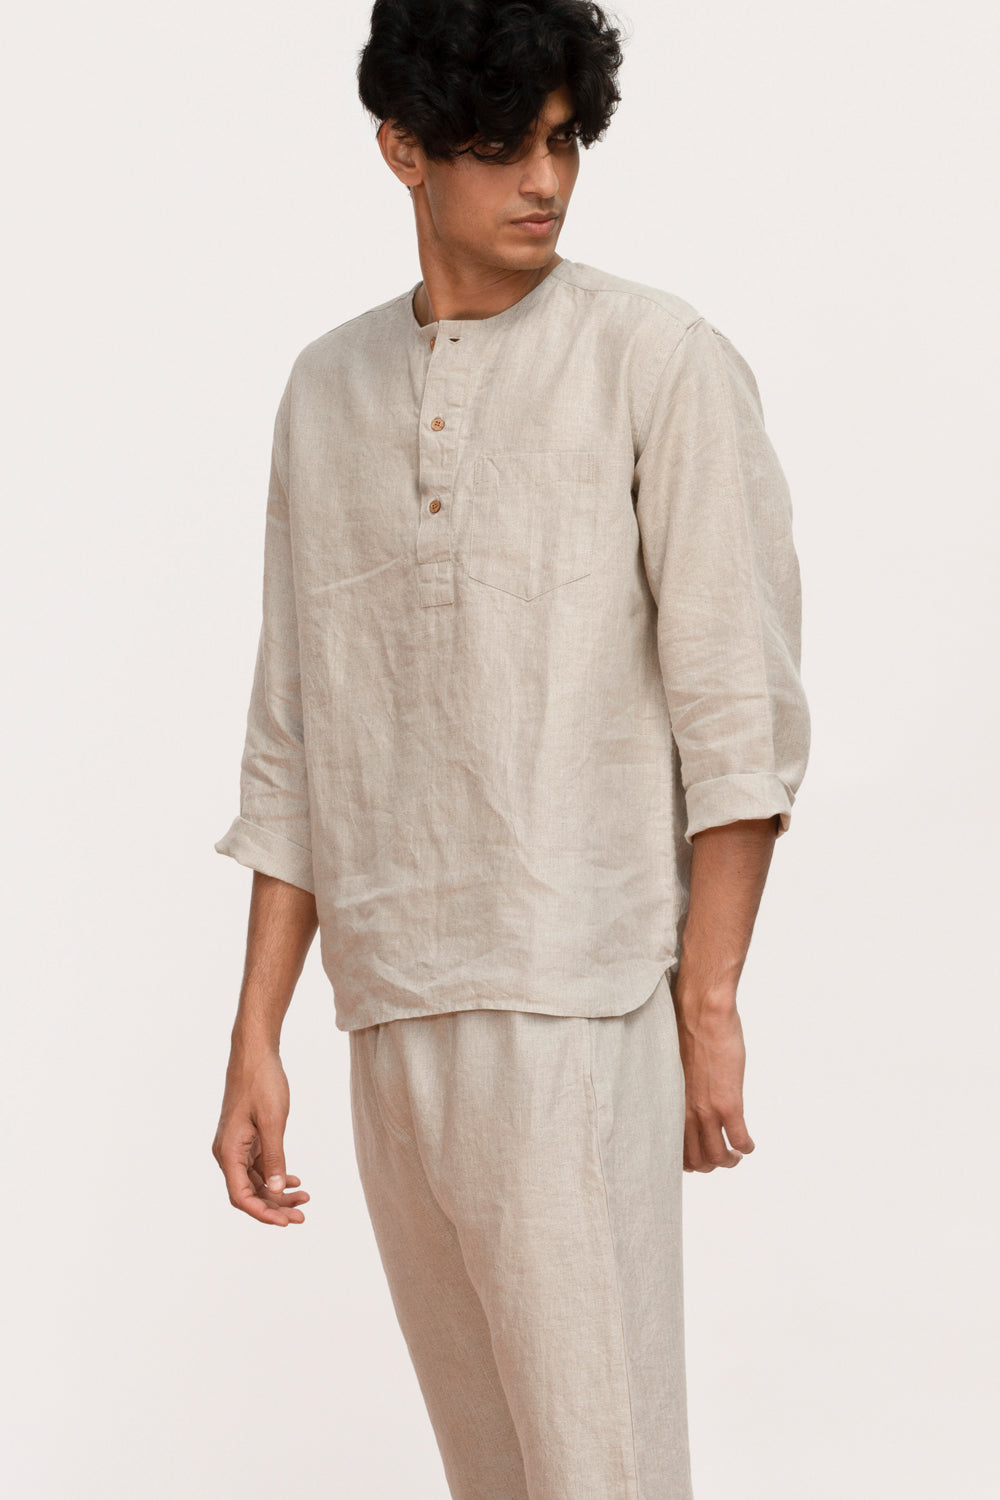 Undyed Linen Men's Pyjama Set – Saphed